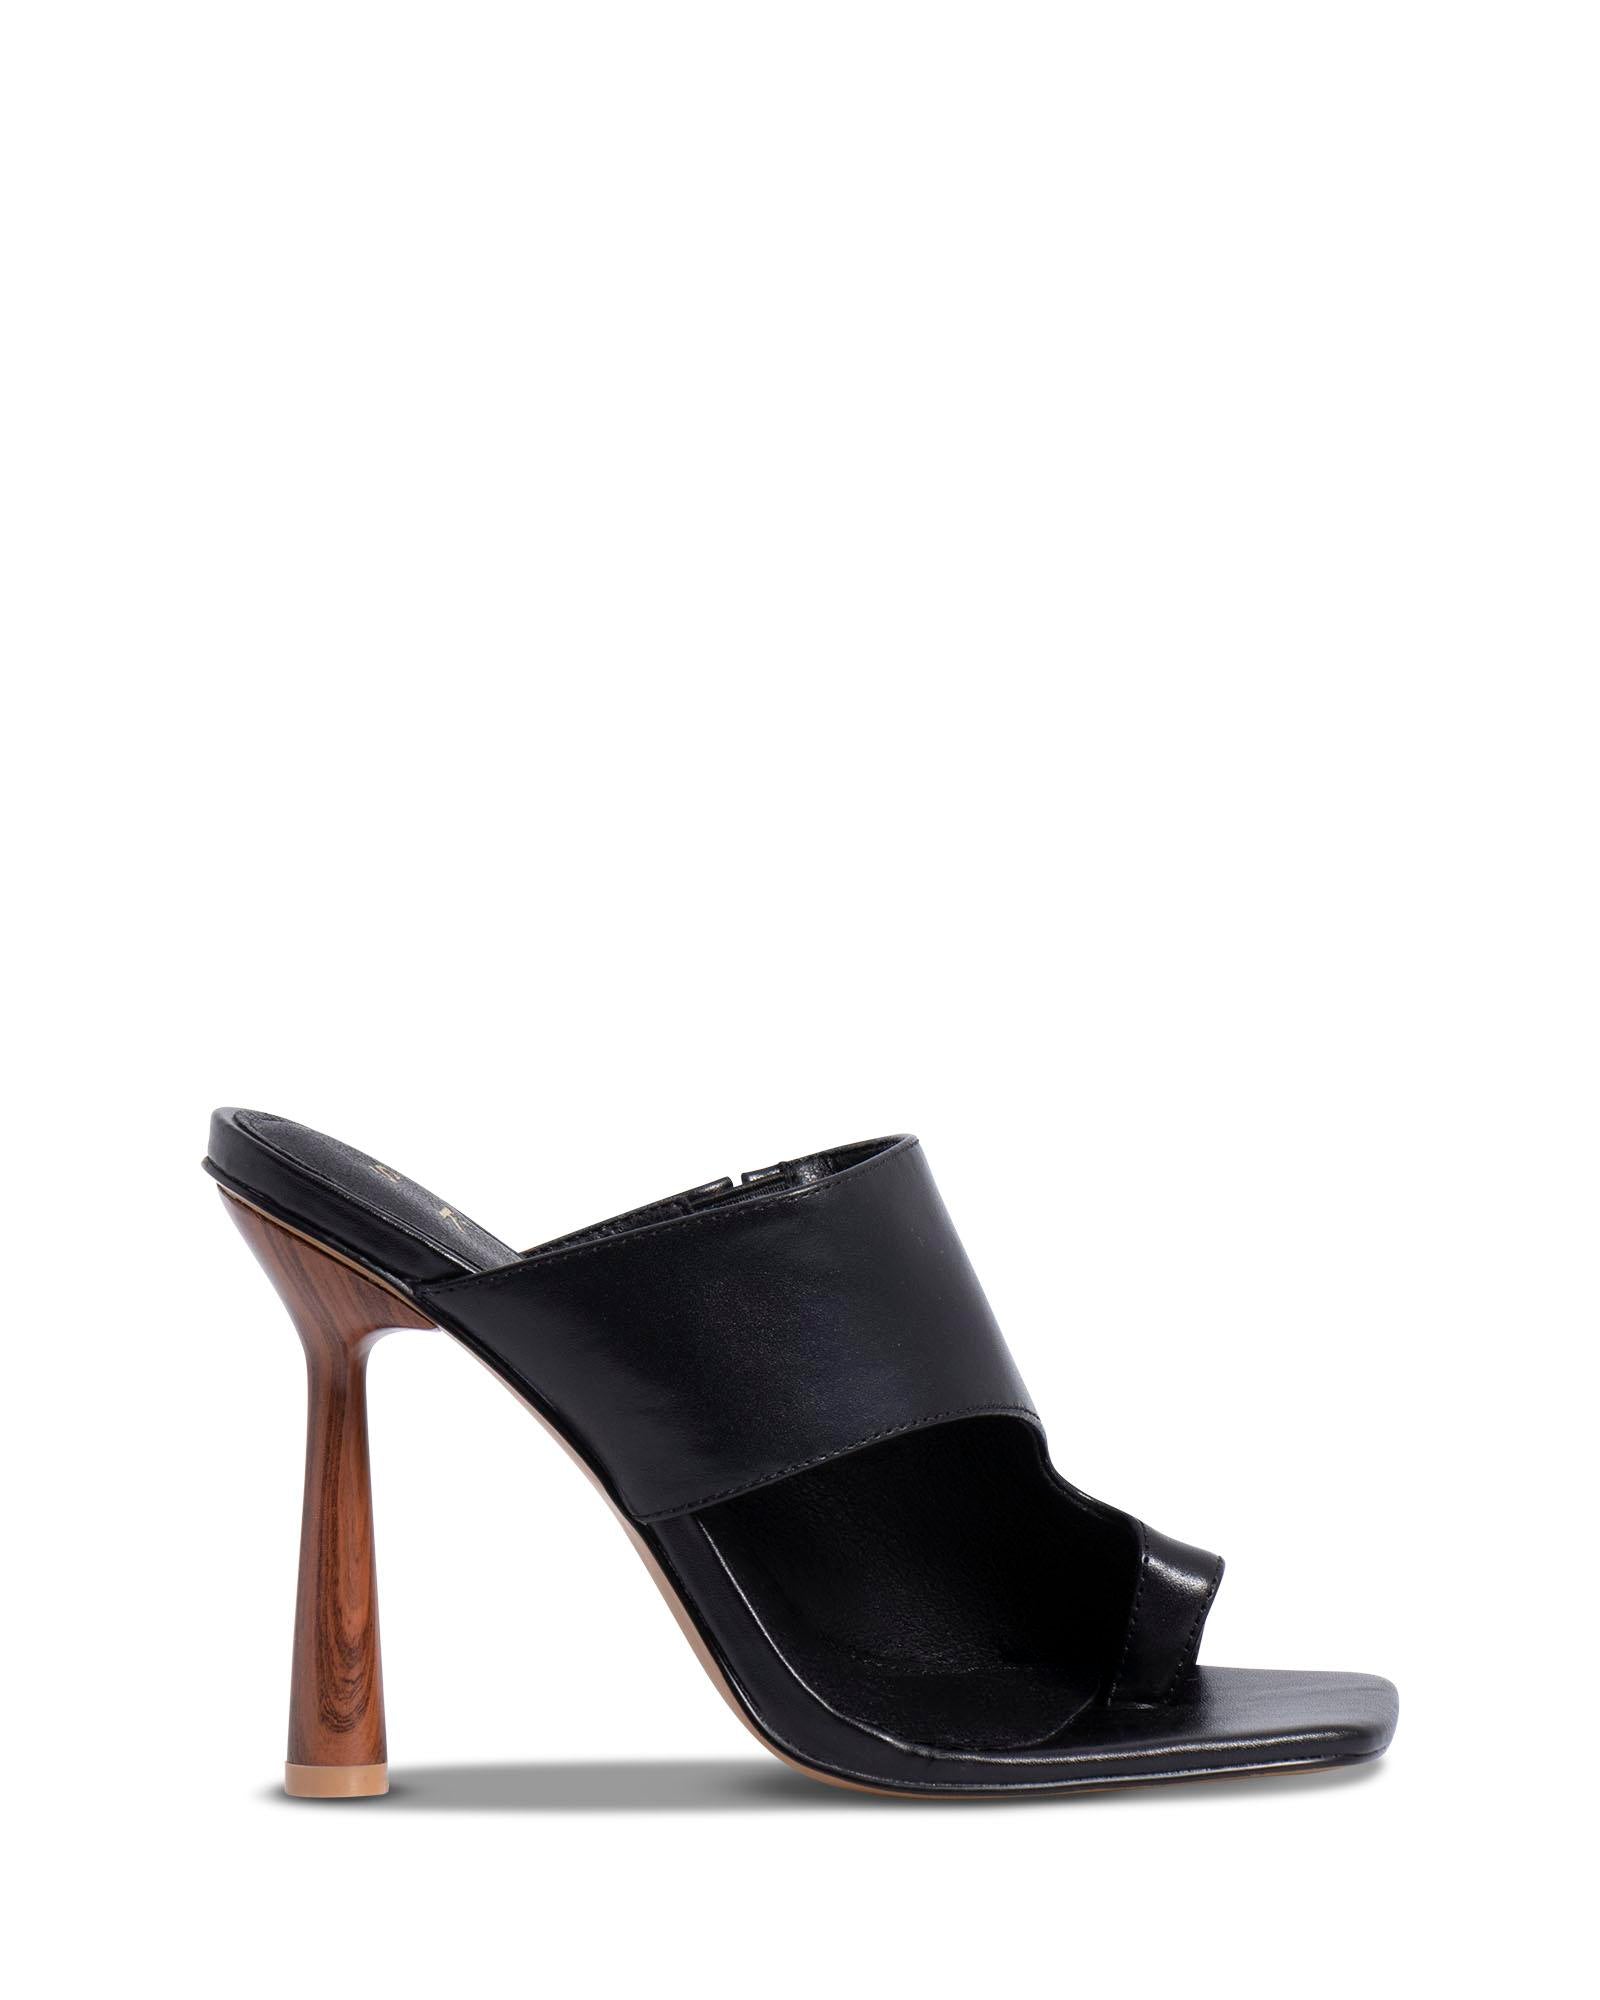 Saint Black 11cm Stiletto Heel with Square Open Toe 